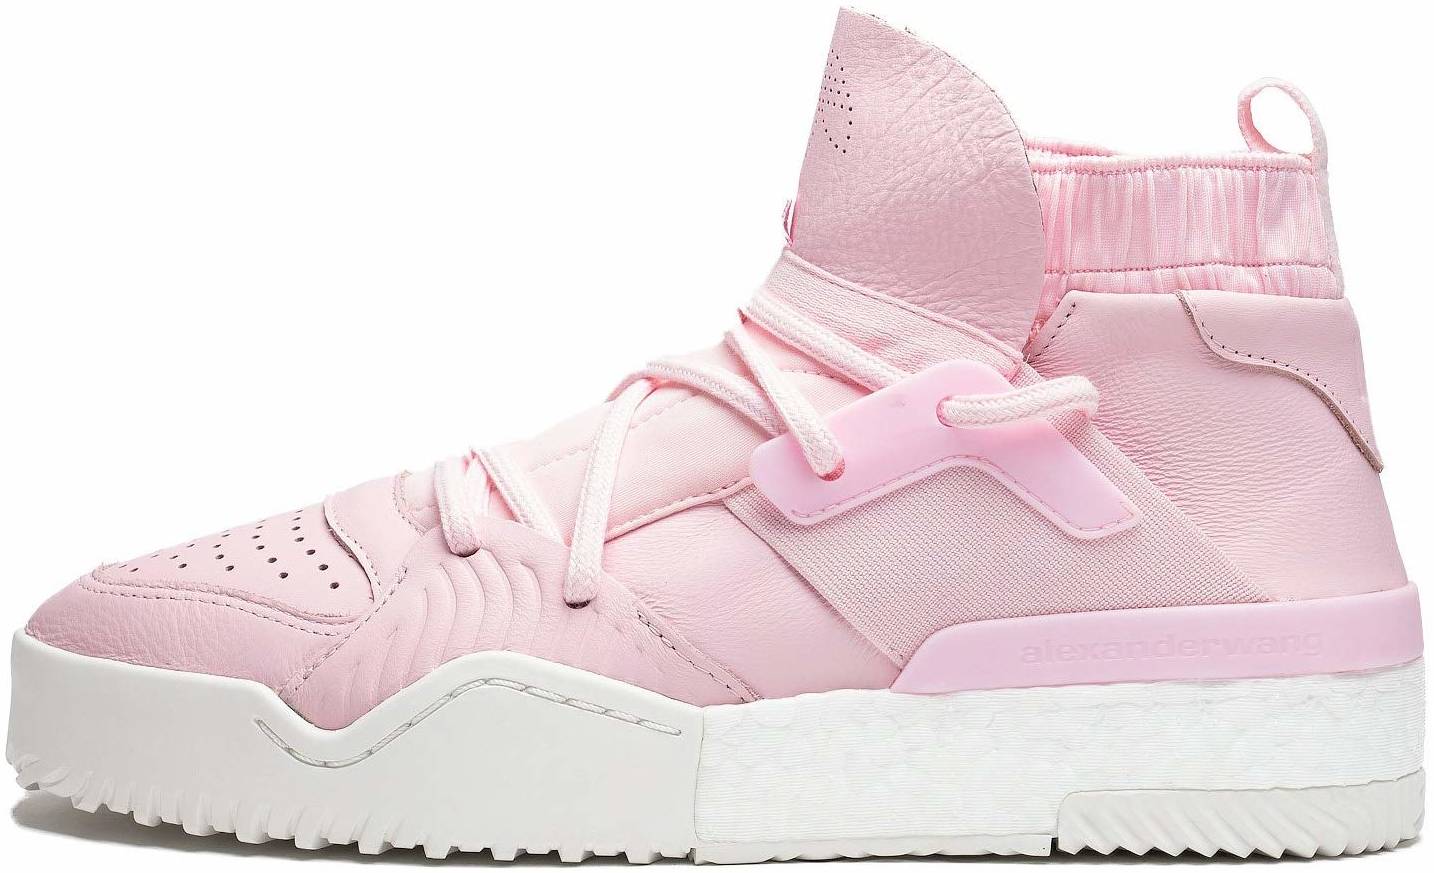 horizon Appal Frog 30+ Pink Adidas sneakers: Save up to 51% | RunRepeat